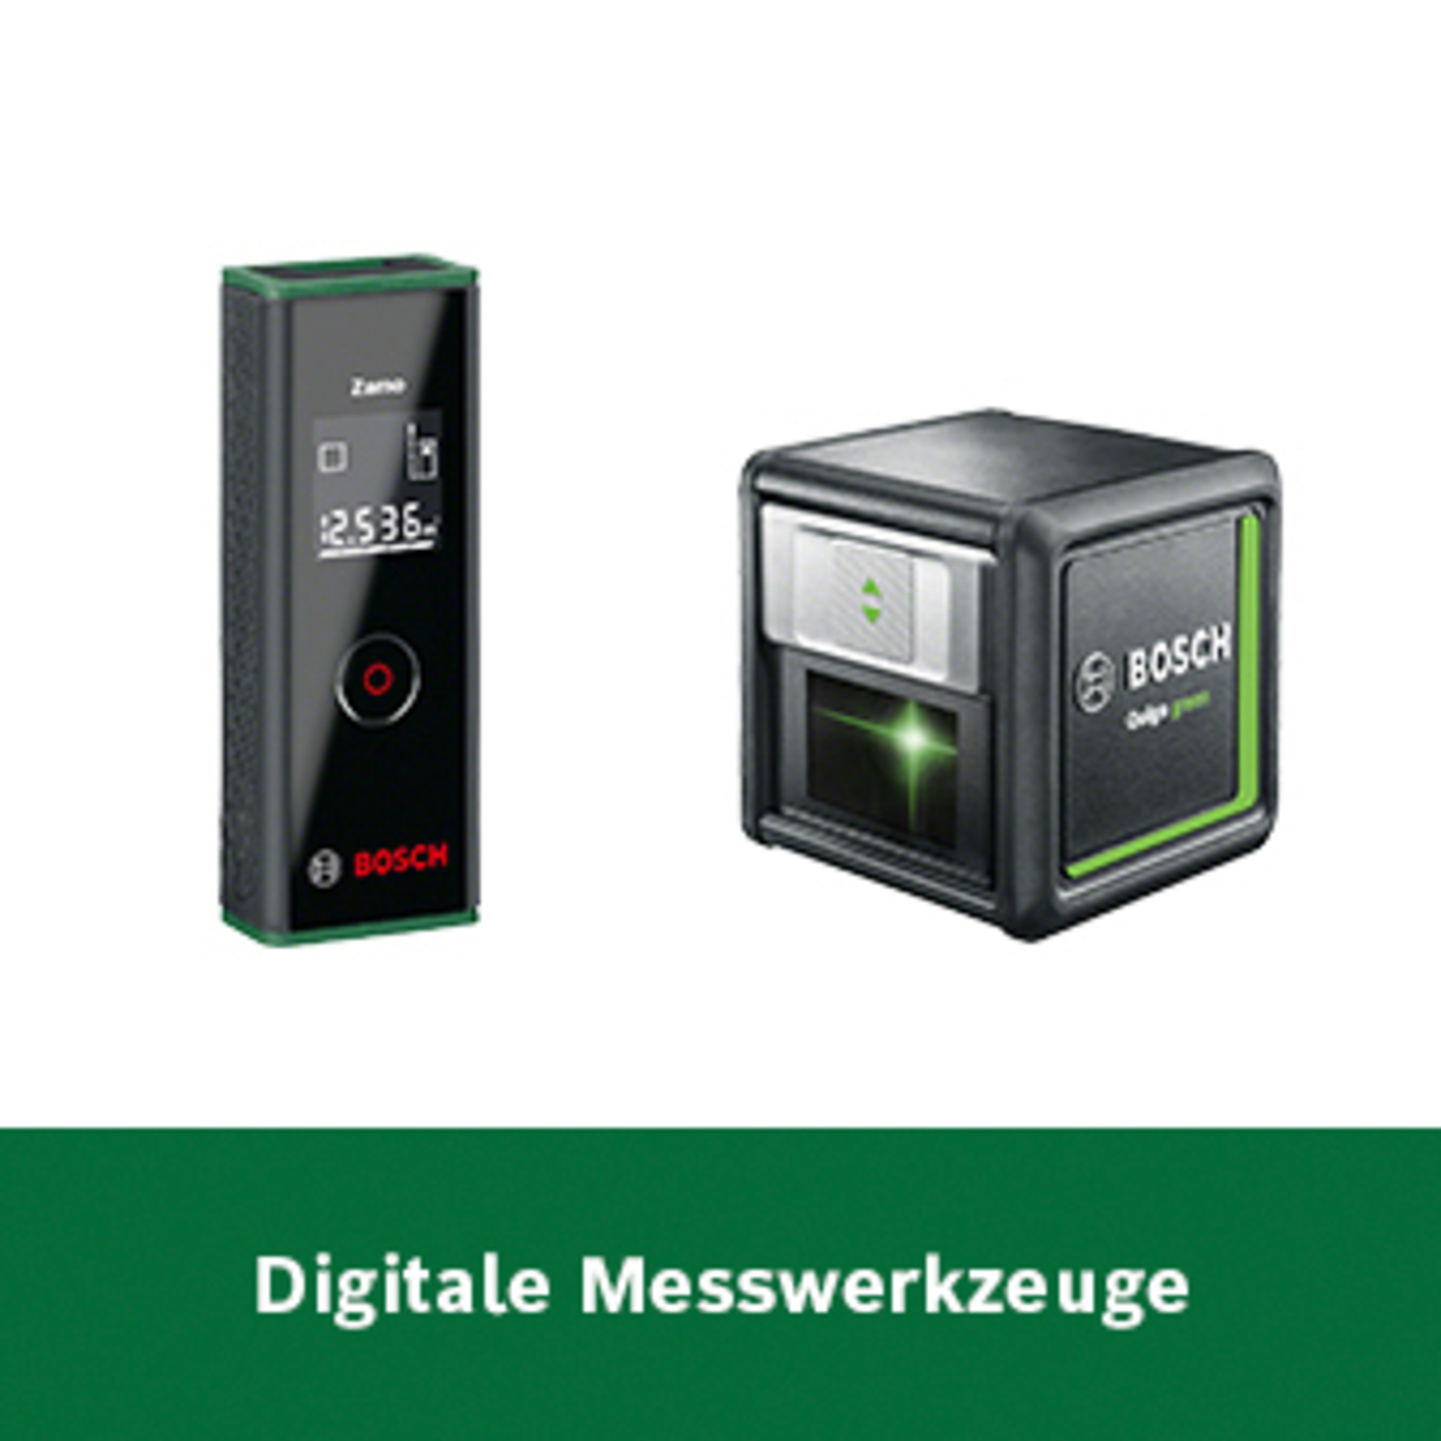 Bosch Digitale Messwerkzeuge